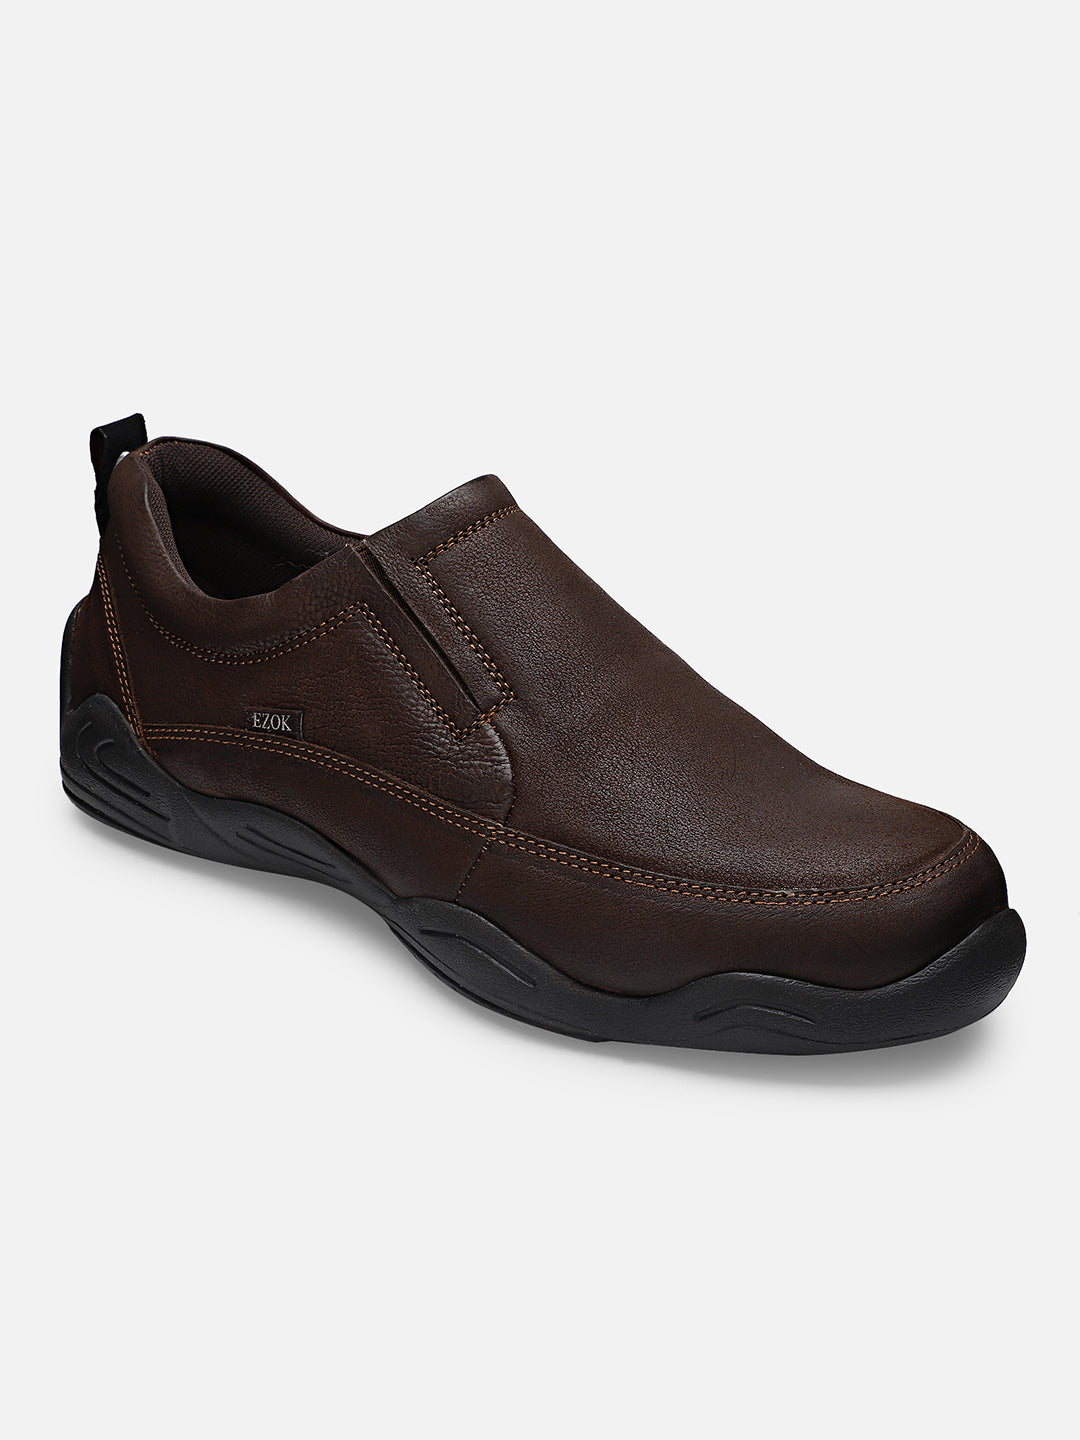 Ezok Men Seger 2100 Brown Leather Sneakers